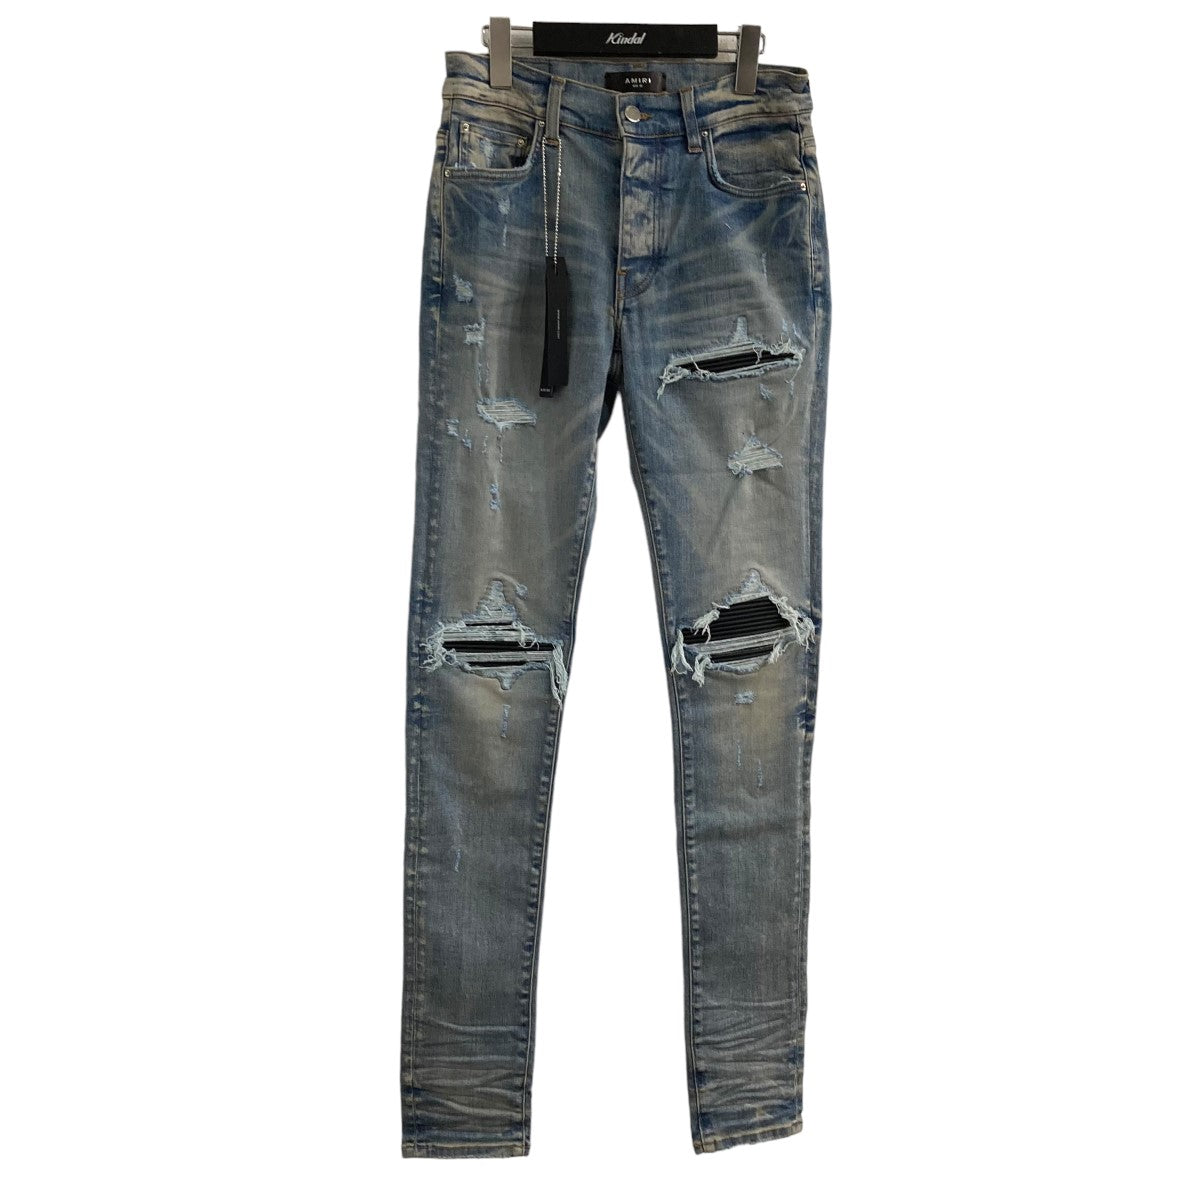 AMIRI(アミリ) 「MX1 408」「Leather Patch Jeans」デニムパンツ ...